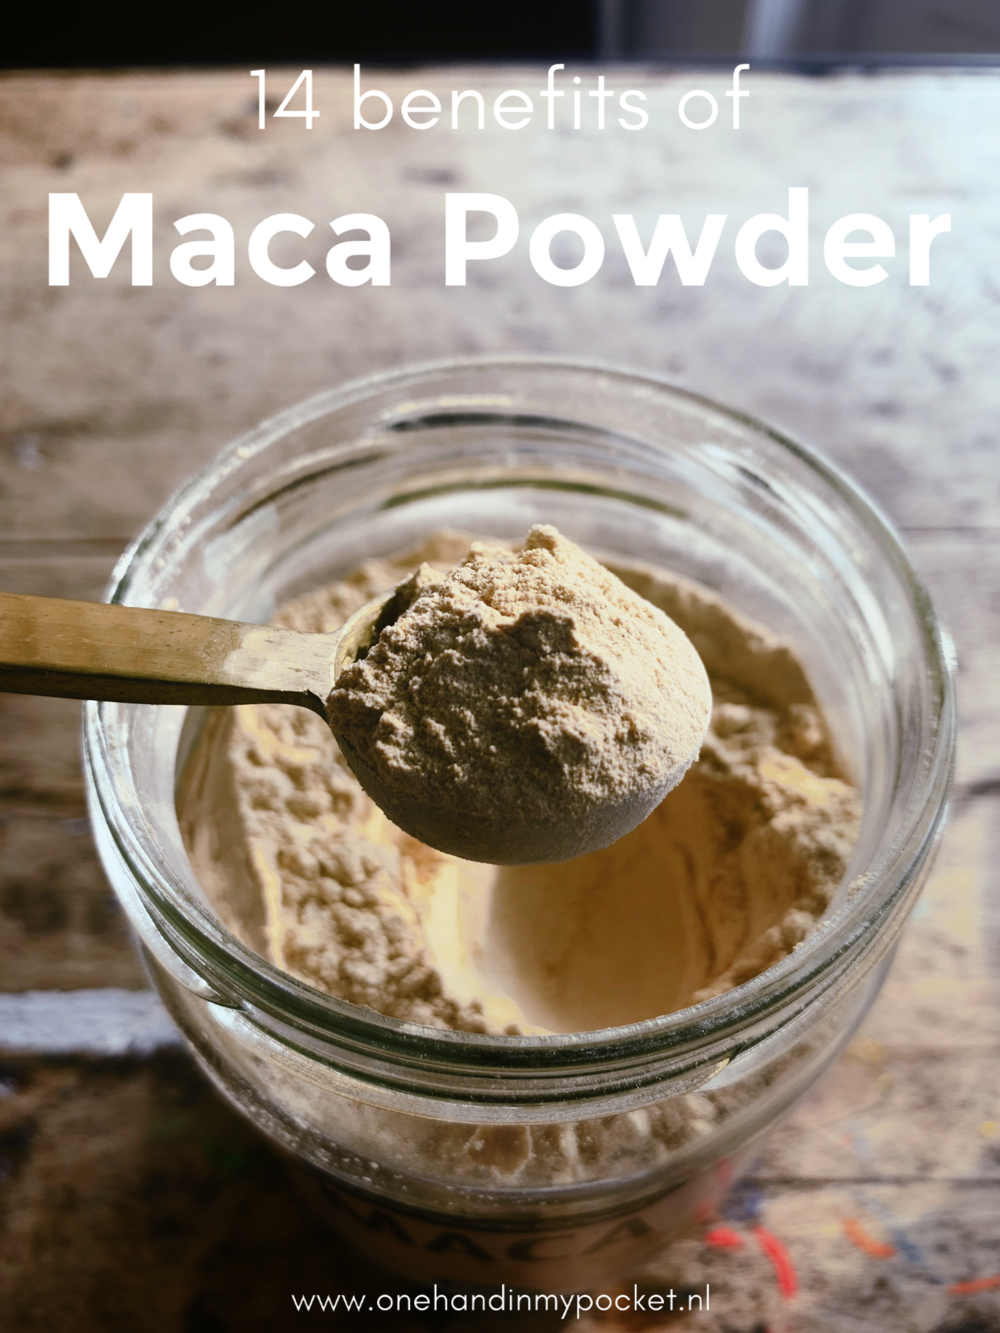 15 health benefits of Maca Powder